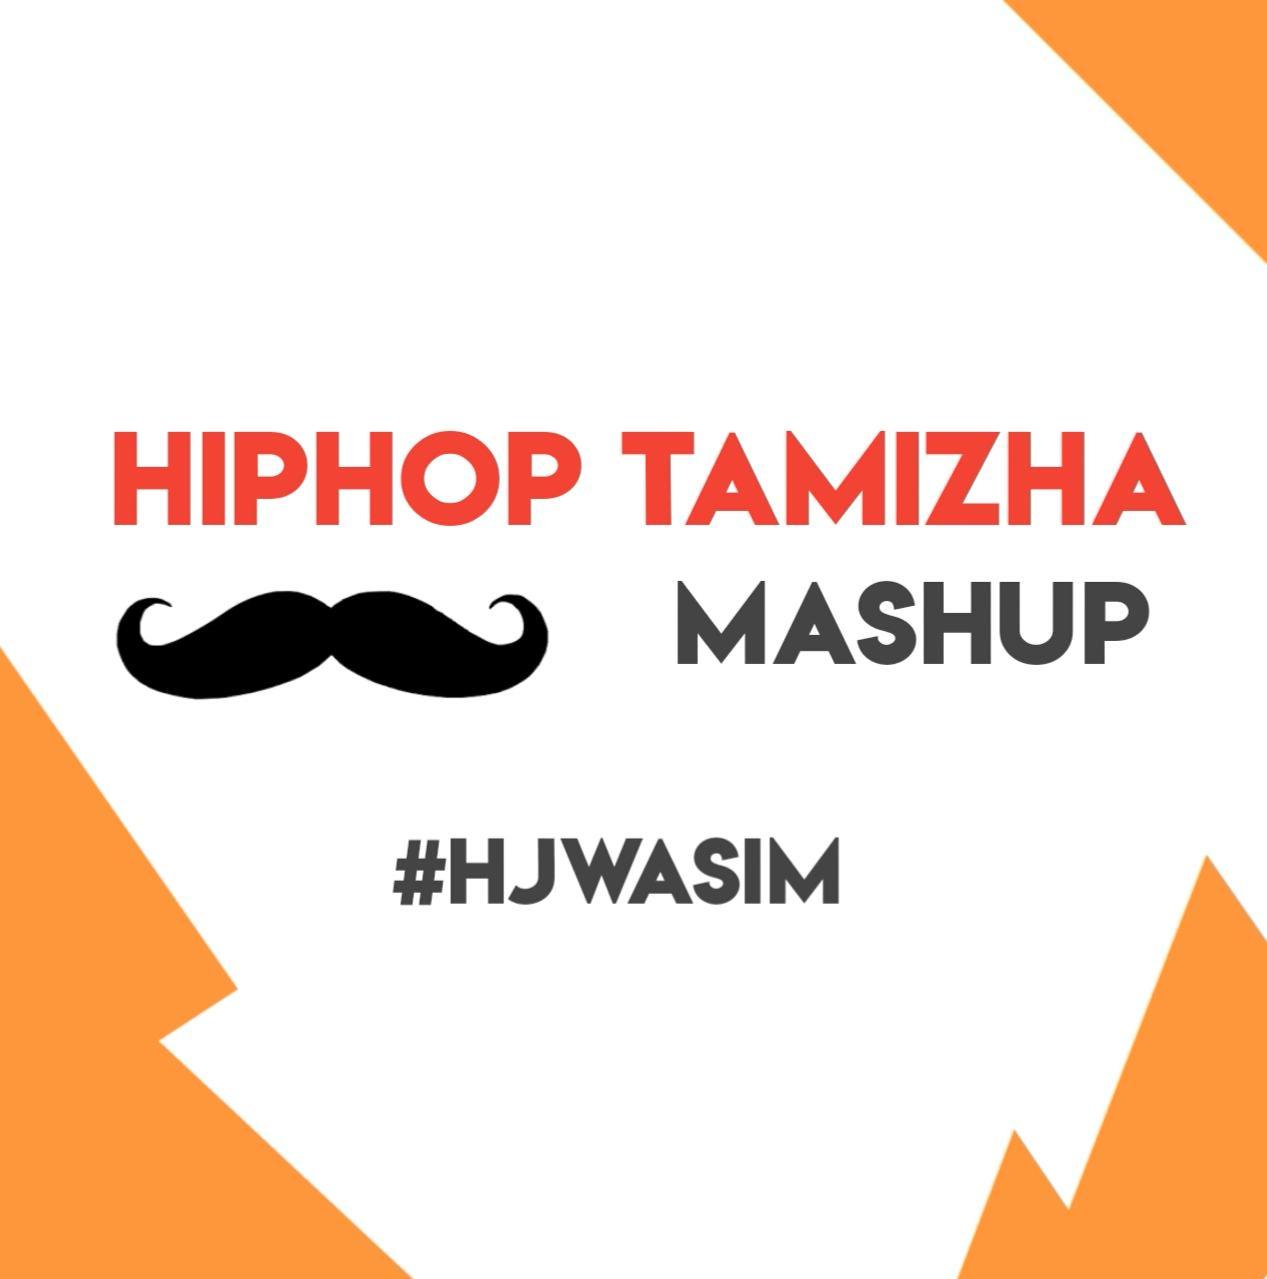 Hiphop Tamizha Mashup Official Song -Hjwasim